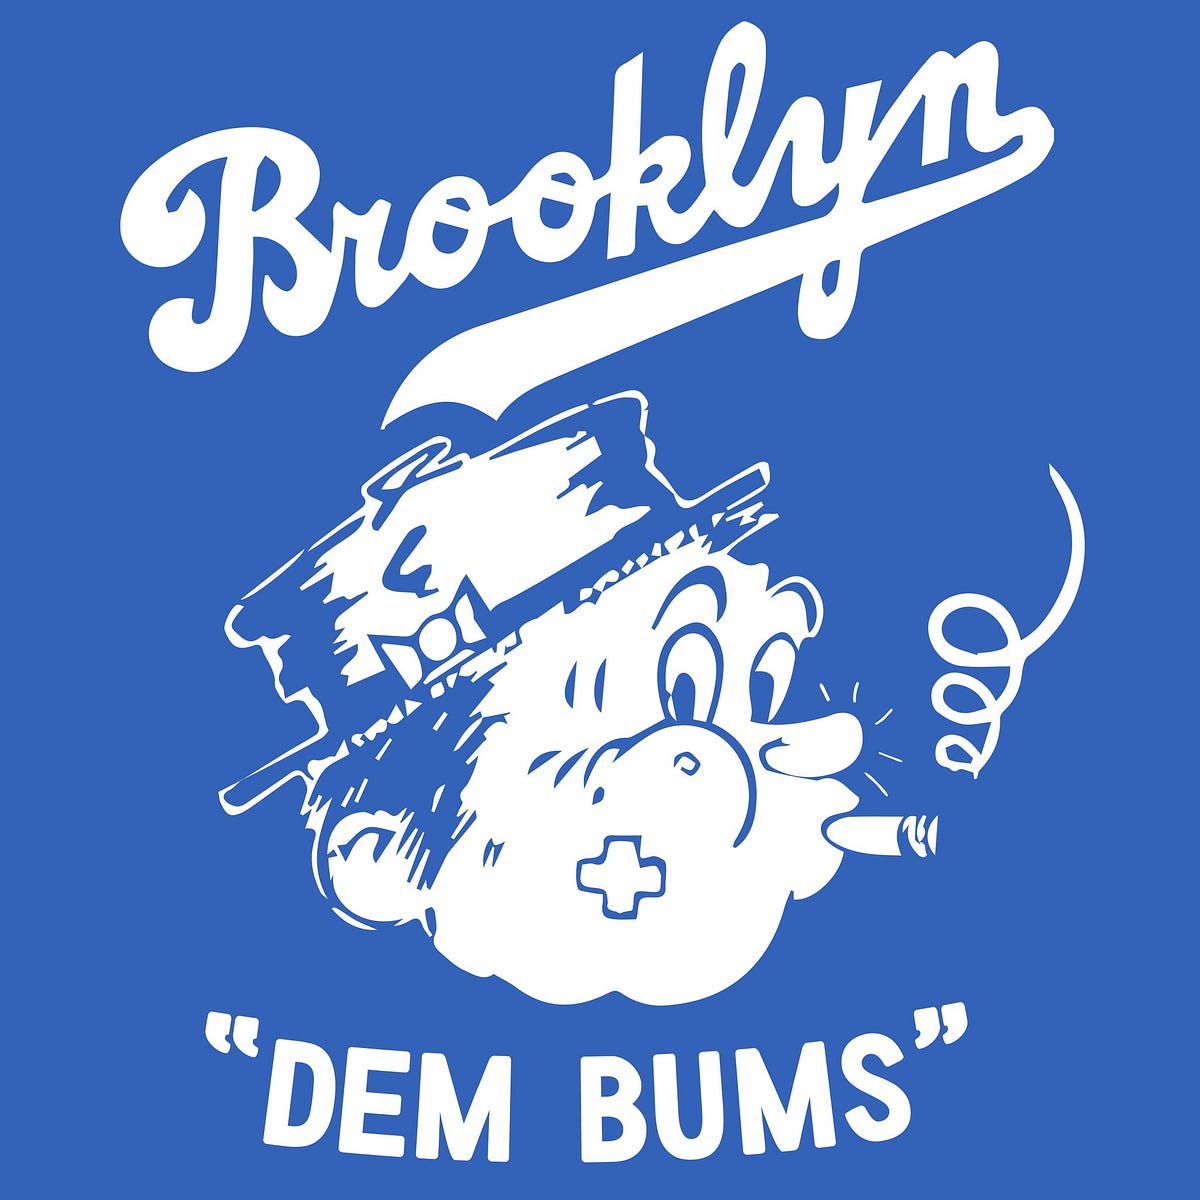 Wait Till THIS Year. How the Brooklyn Dodgers can teach us…